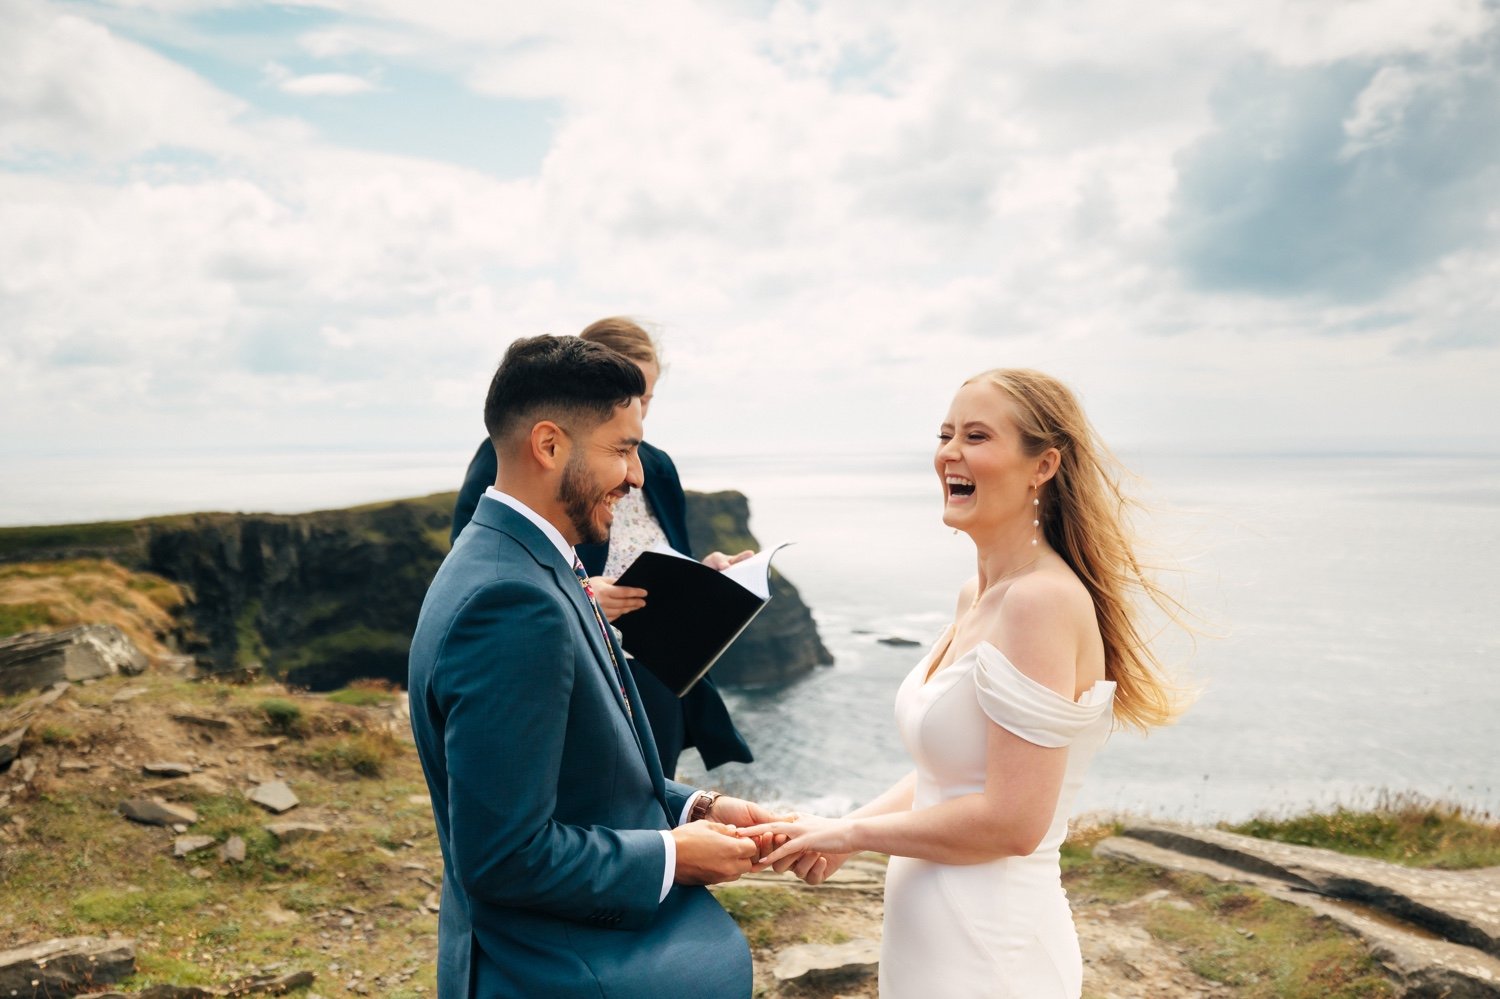 38_Ireland-cliff-elopement-wedding-photographer-kmp-photography-9476.jpg